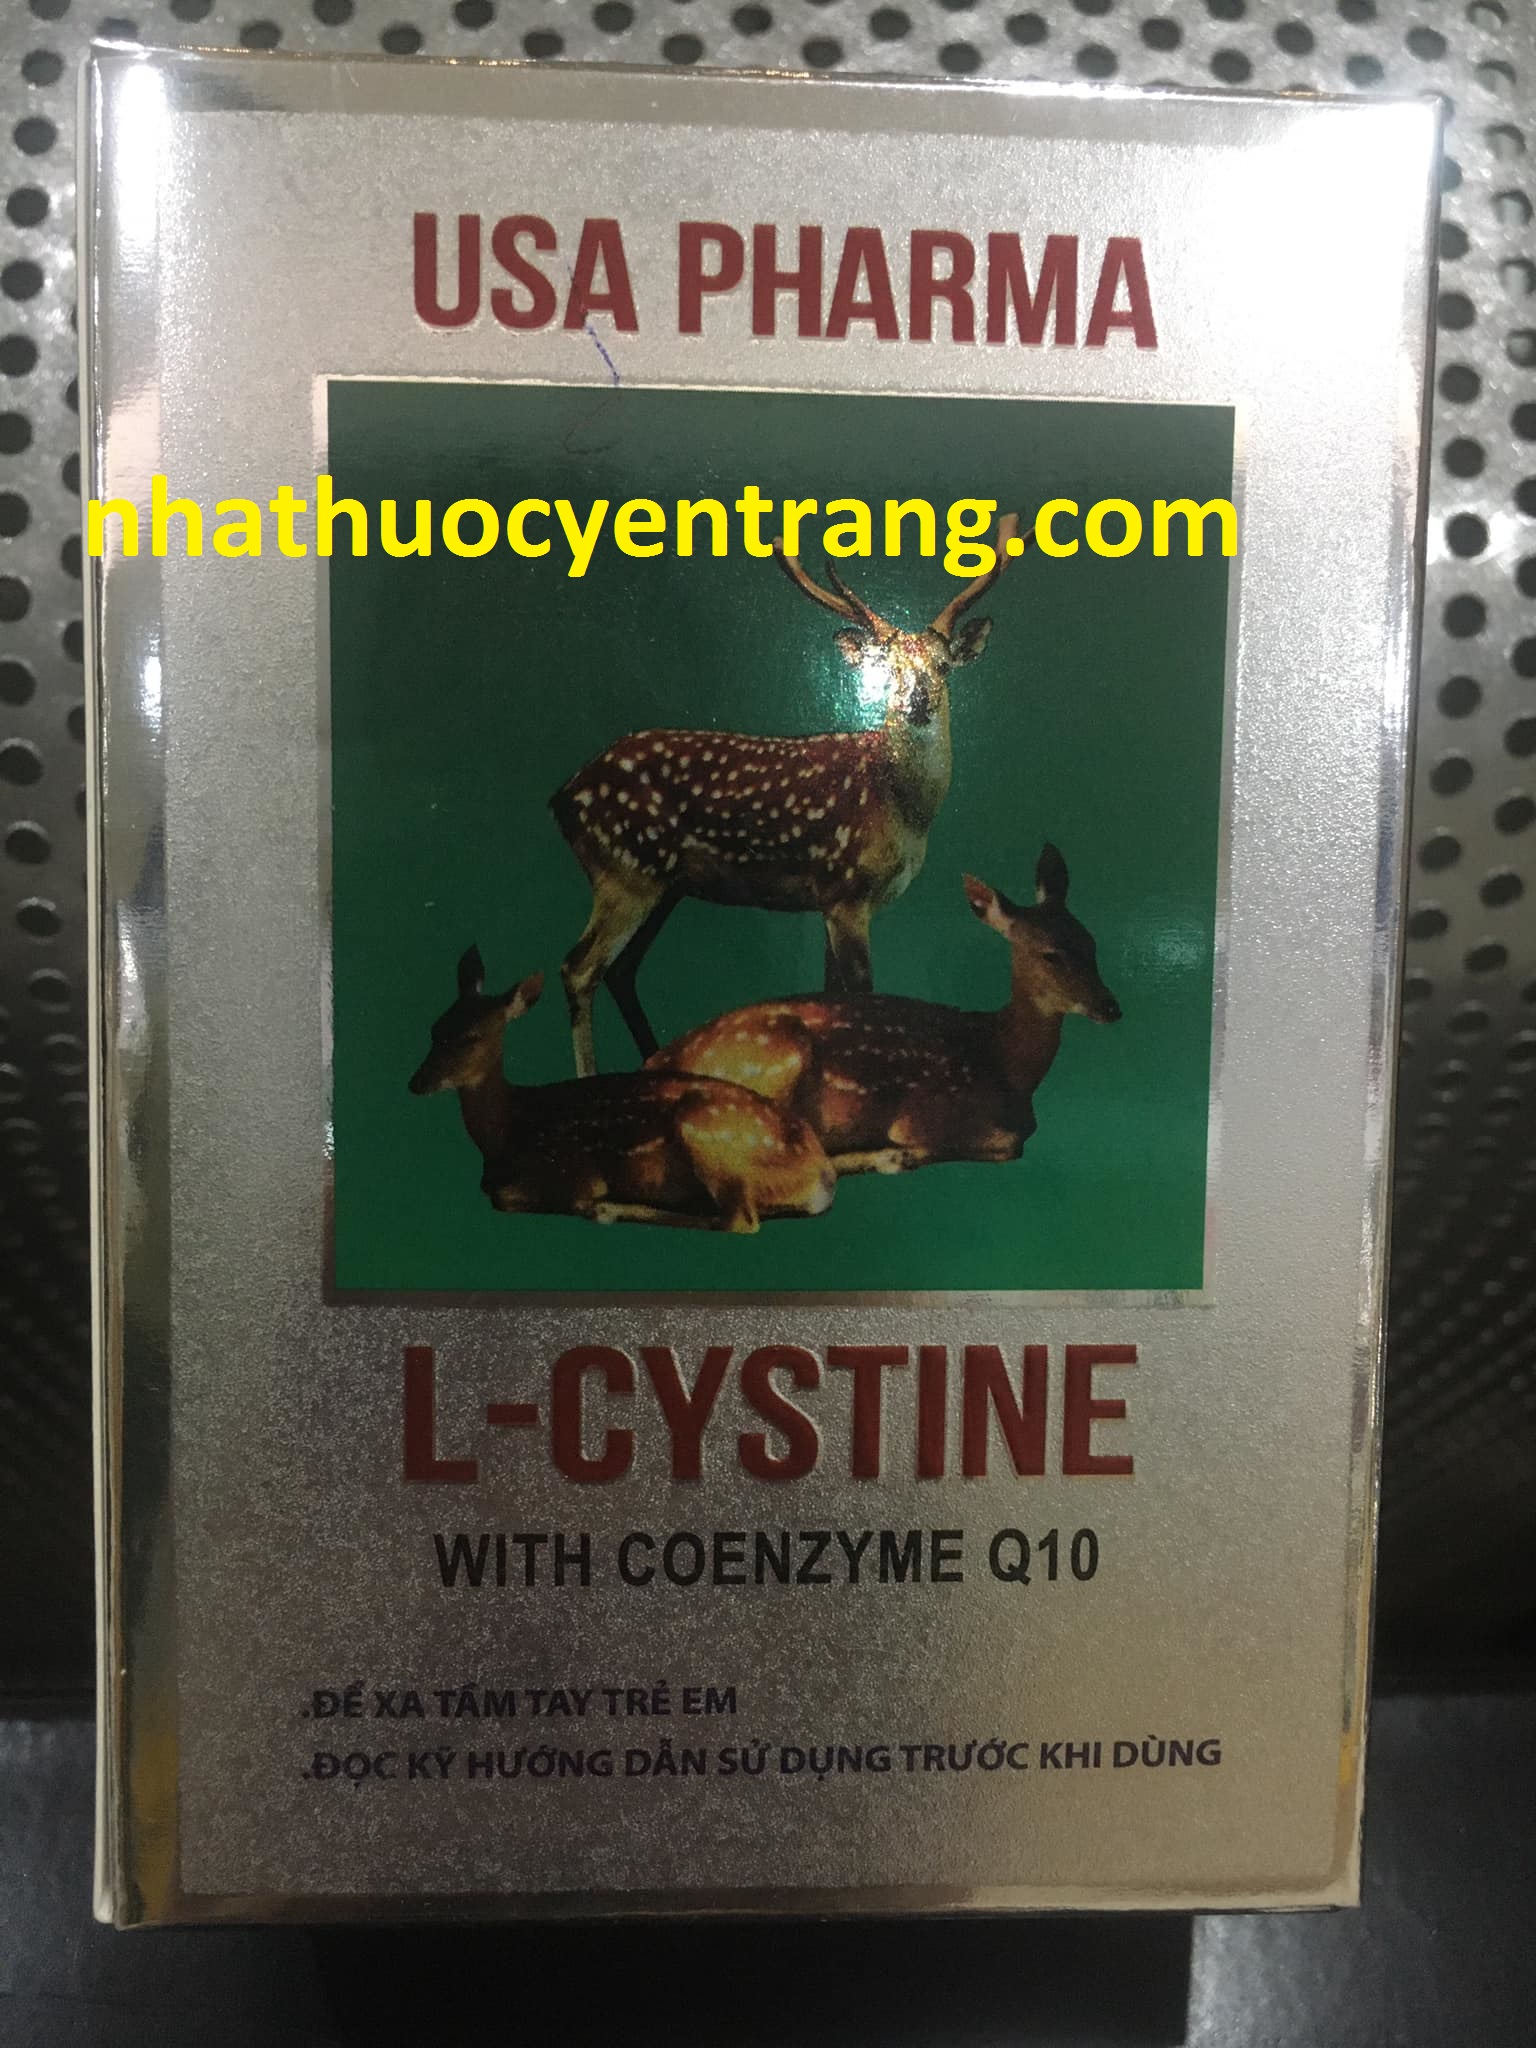 L-Cystine USA Pharma